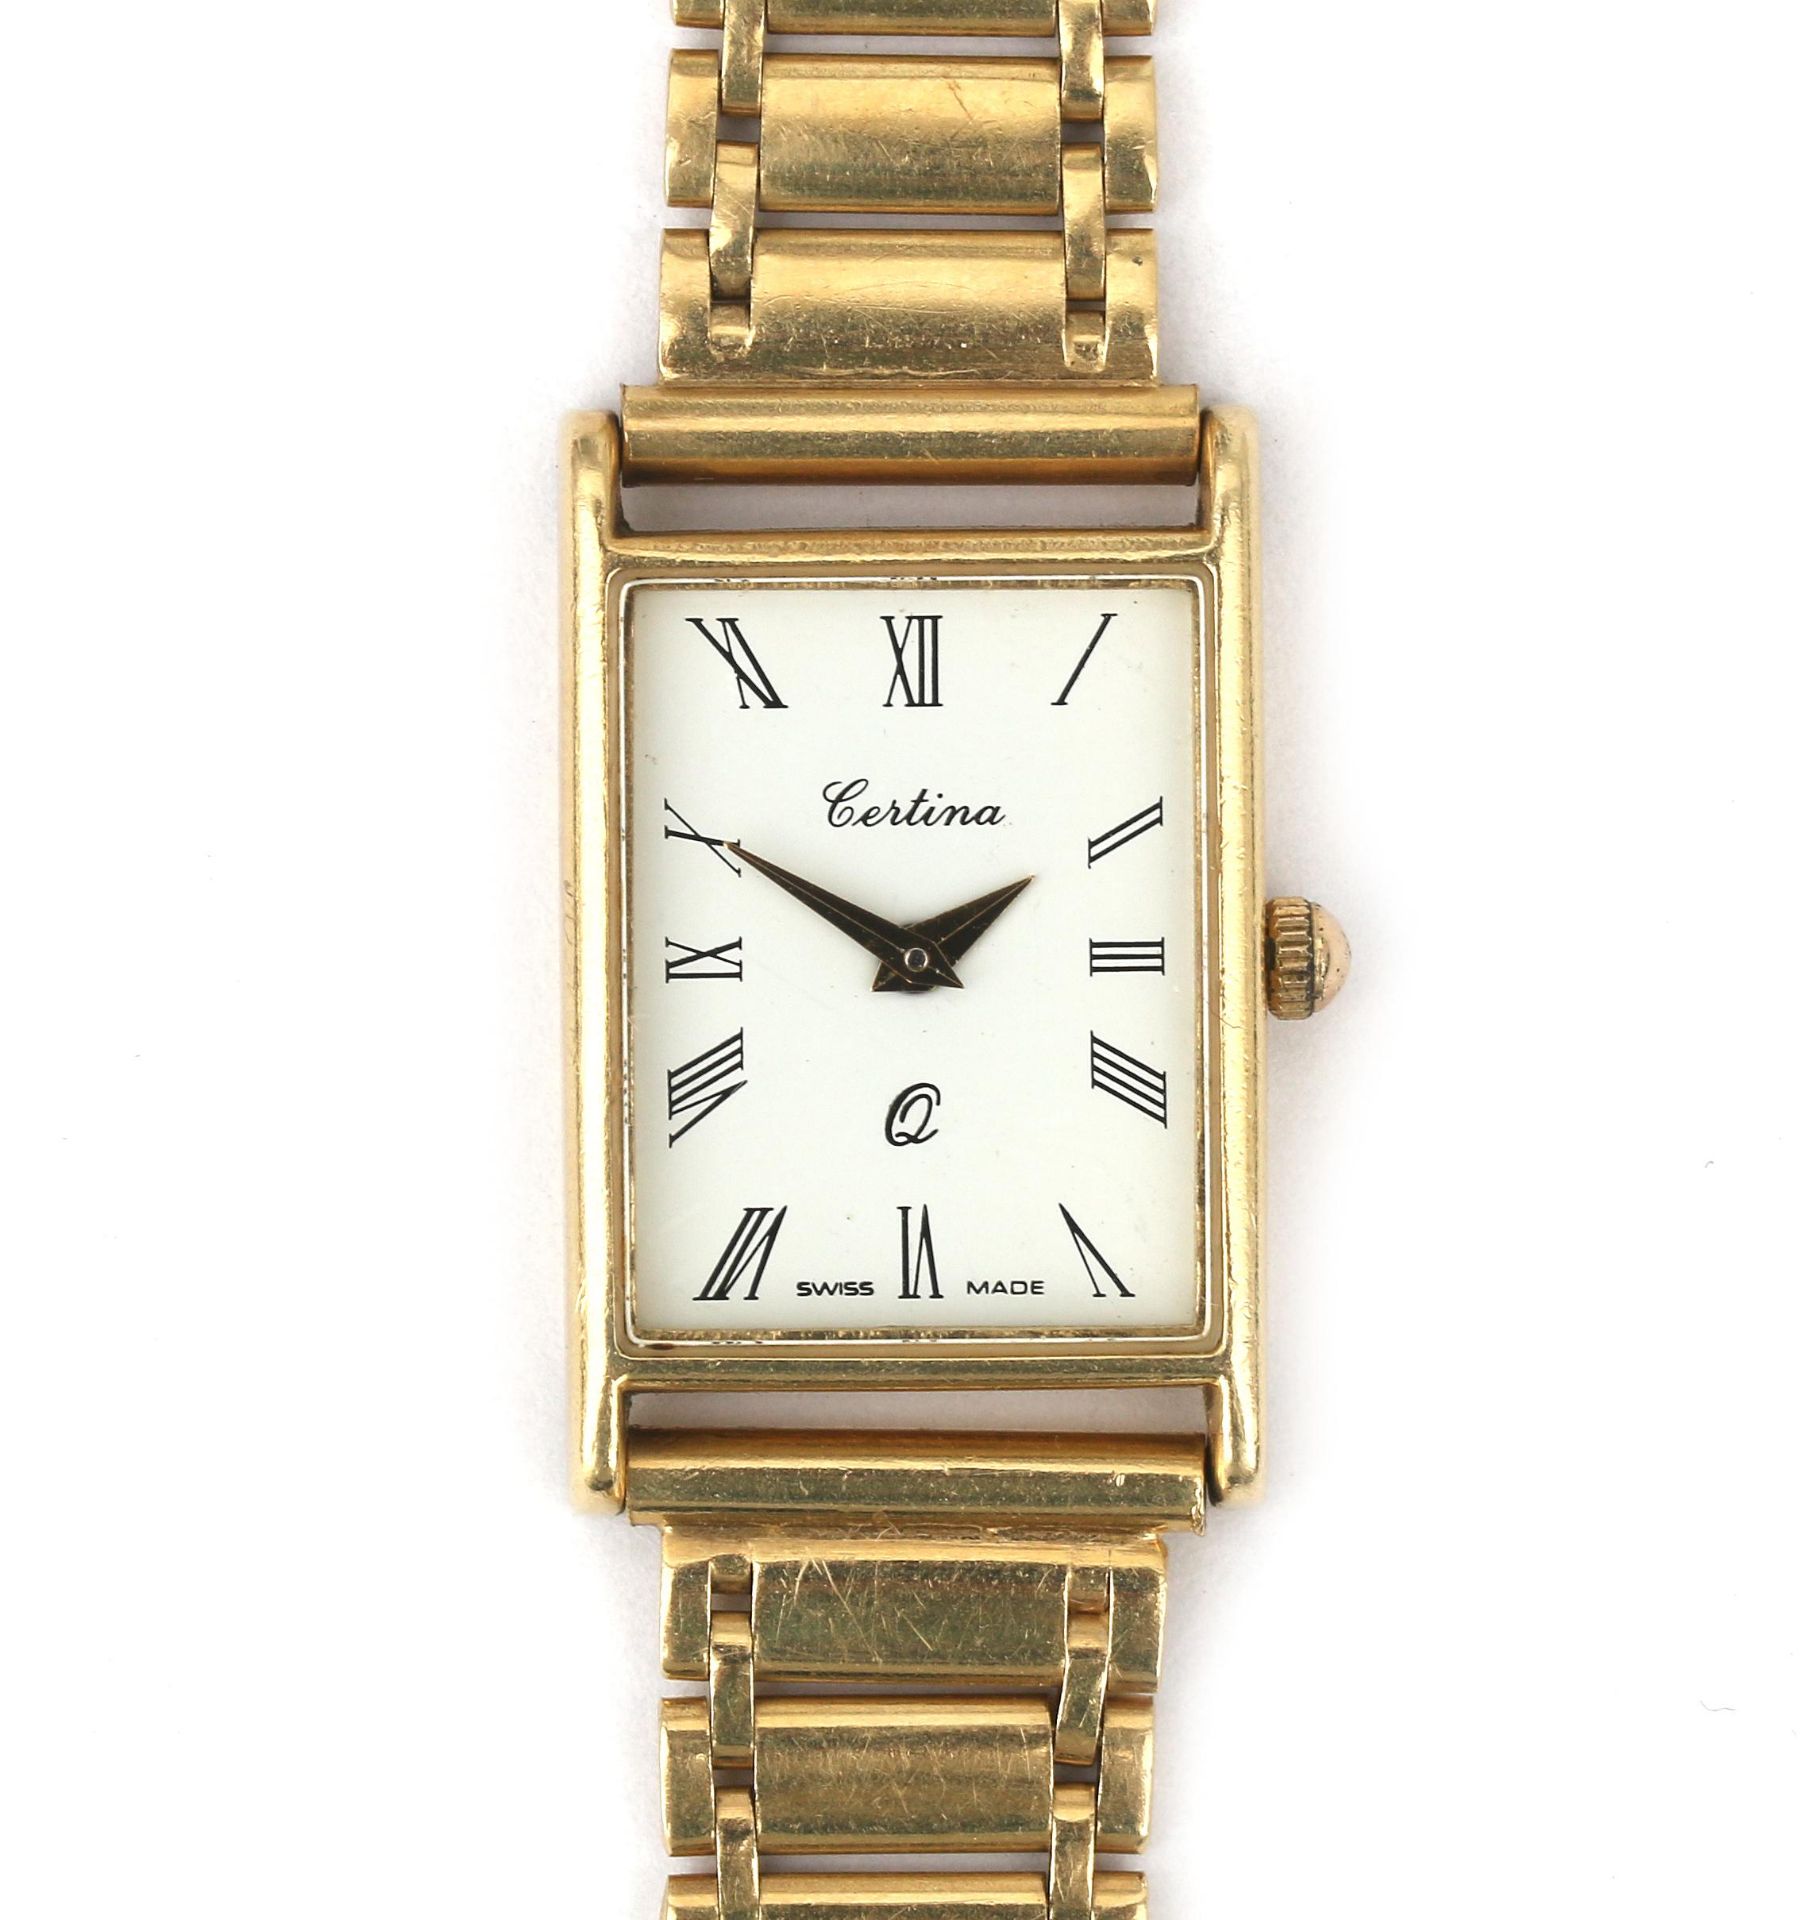 A 14 karat gold Certina lady's wristwatch